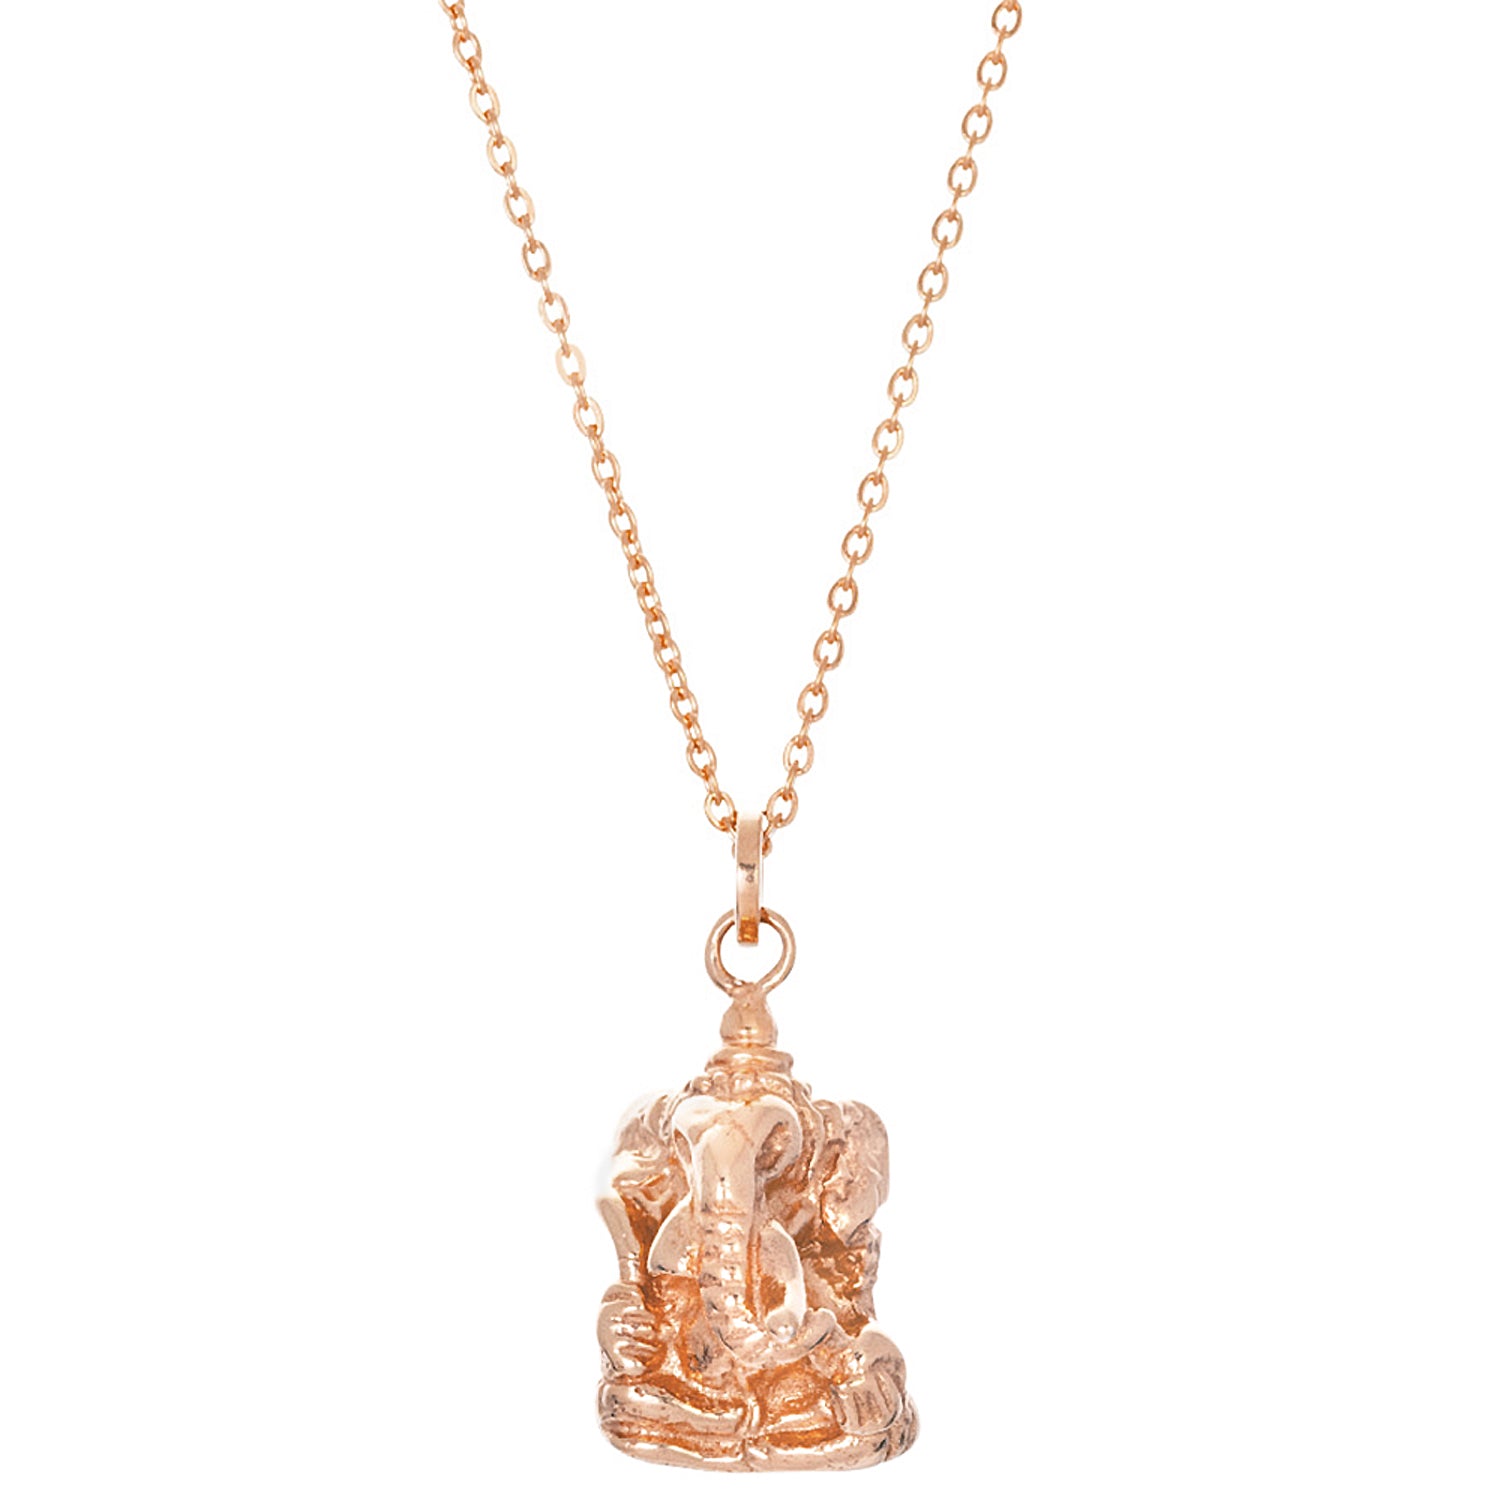 Antiker Ganesha Anhänger rosévergoldet von ETERNAL BLISS - Spiritueller Schmuck